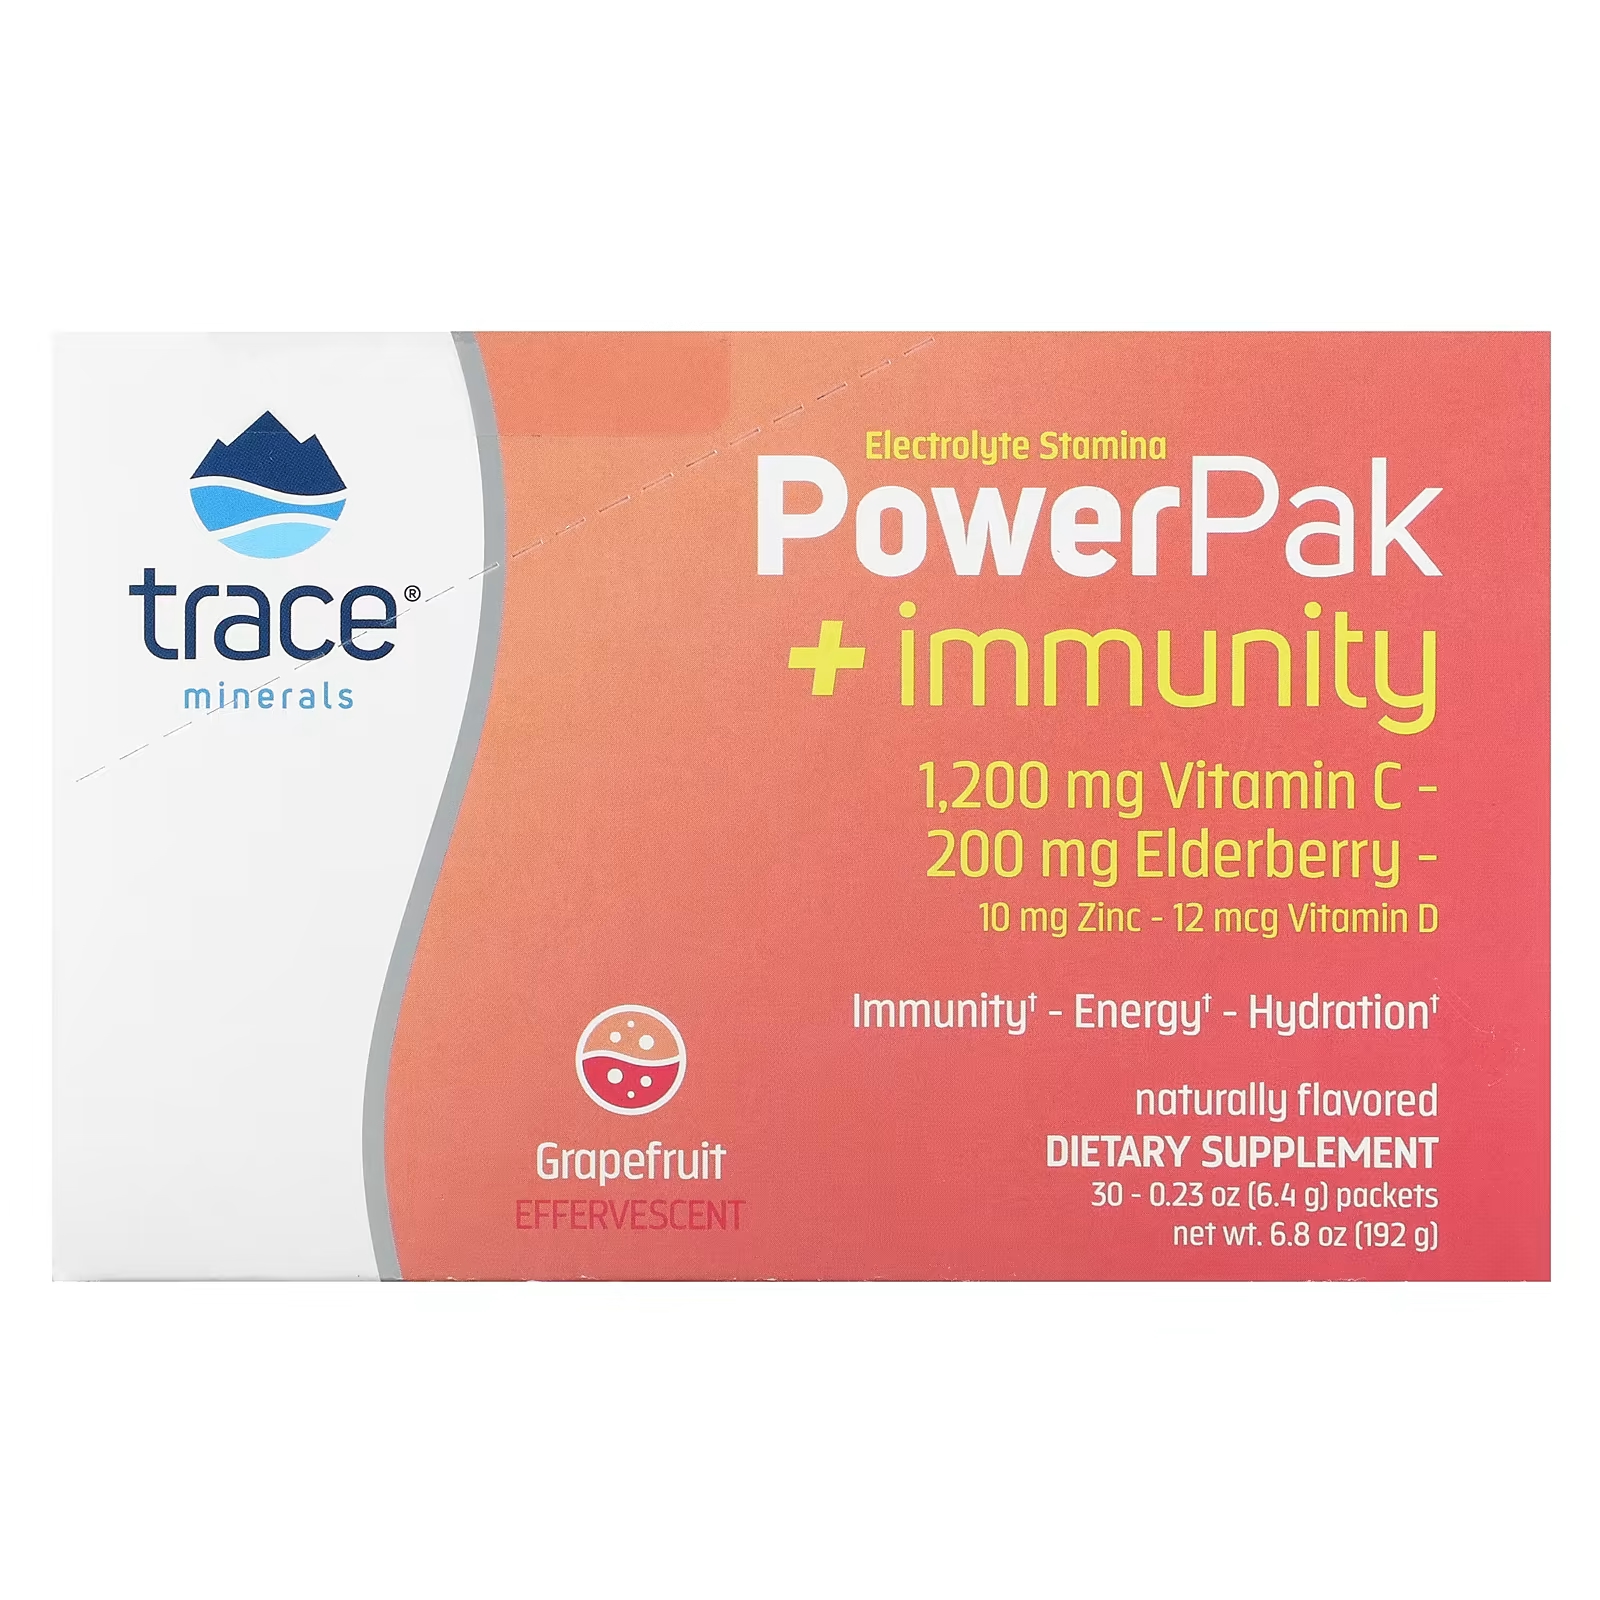 Электролит Trace Minerals Stamina PowerPak + Immunity Grapefruit, 30 пакетов